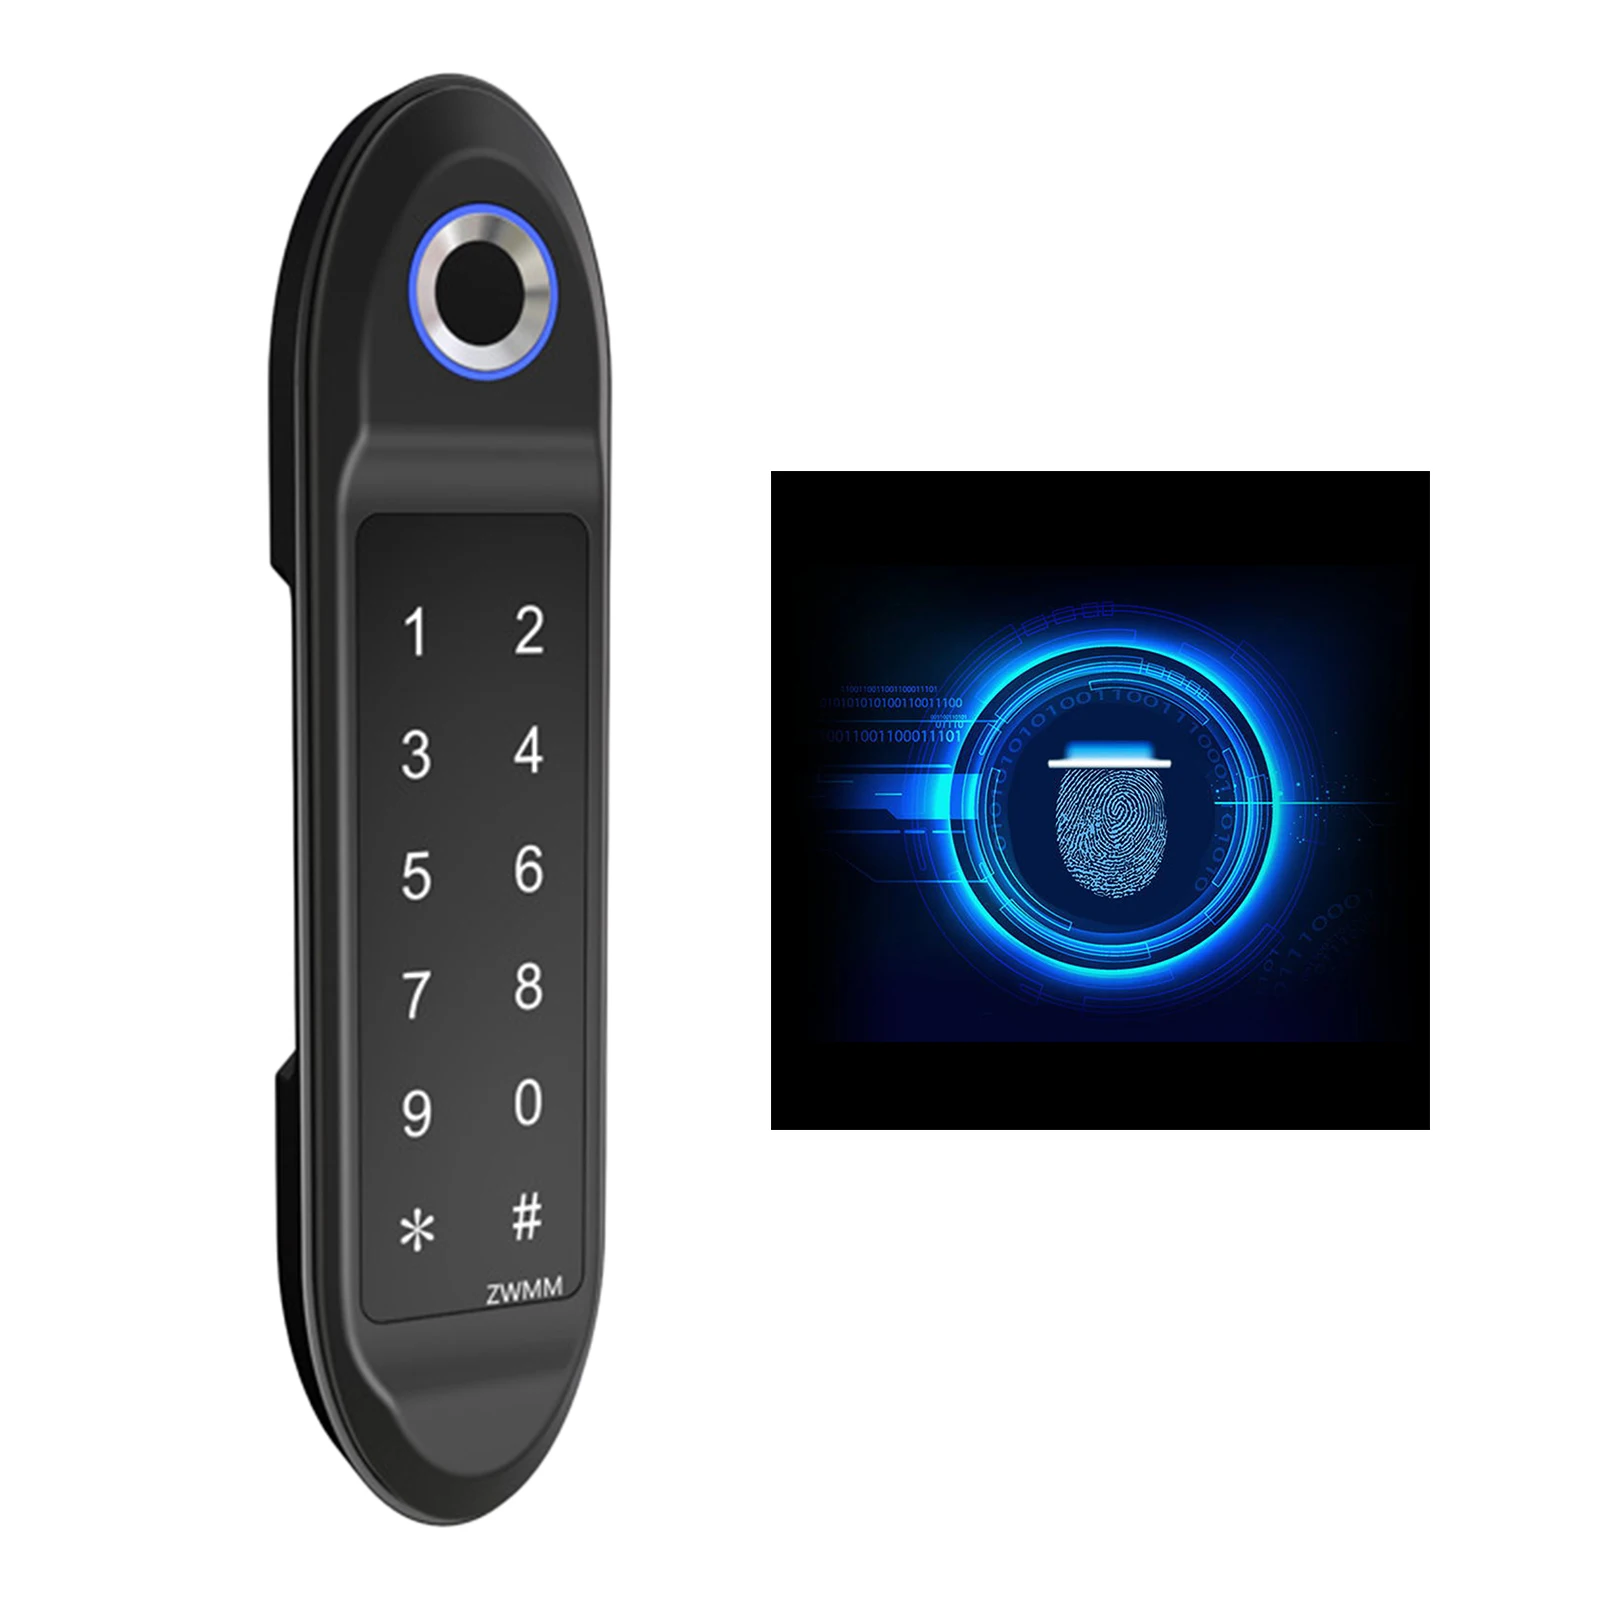 Fingerprint Password Cabinet Door Locks Keyless Entry Lock for Home Security